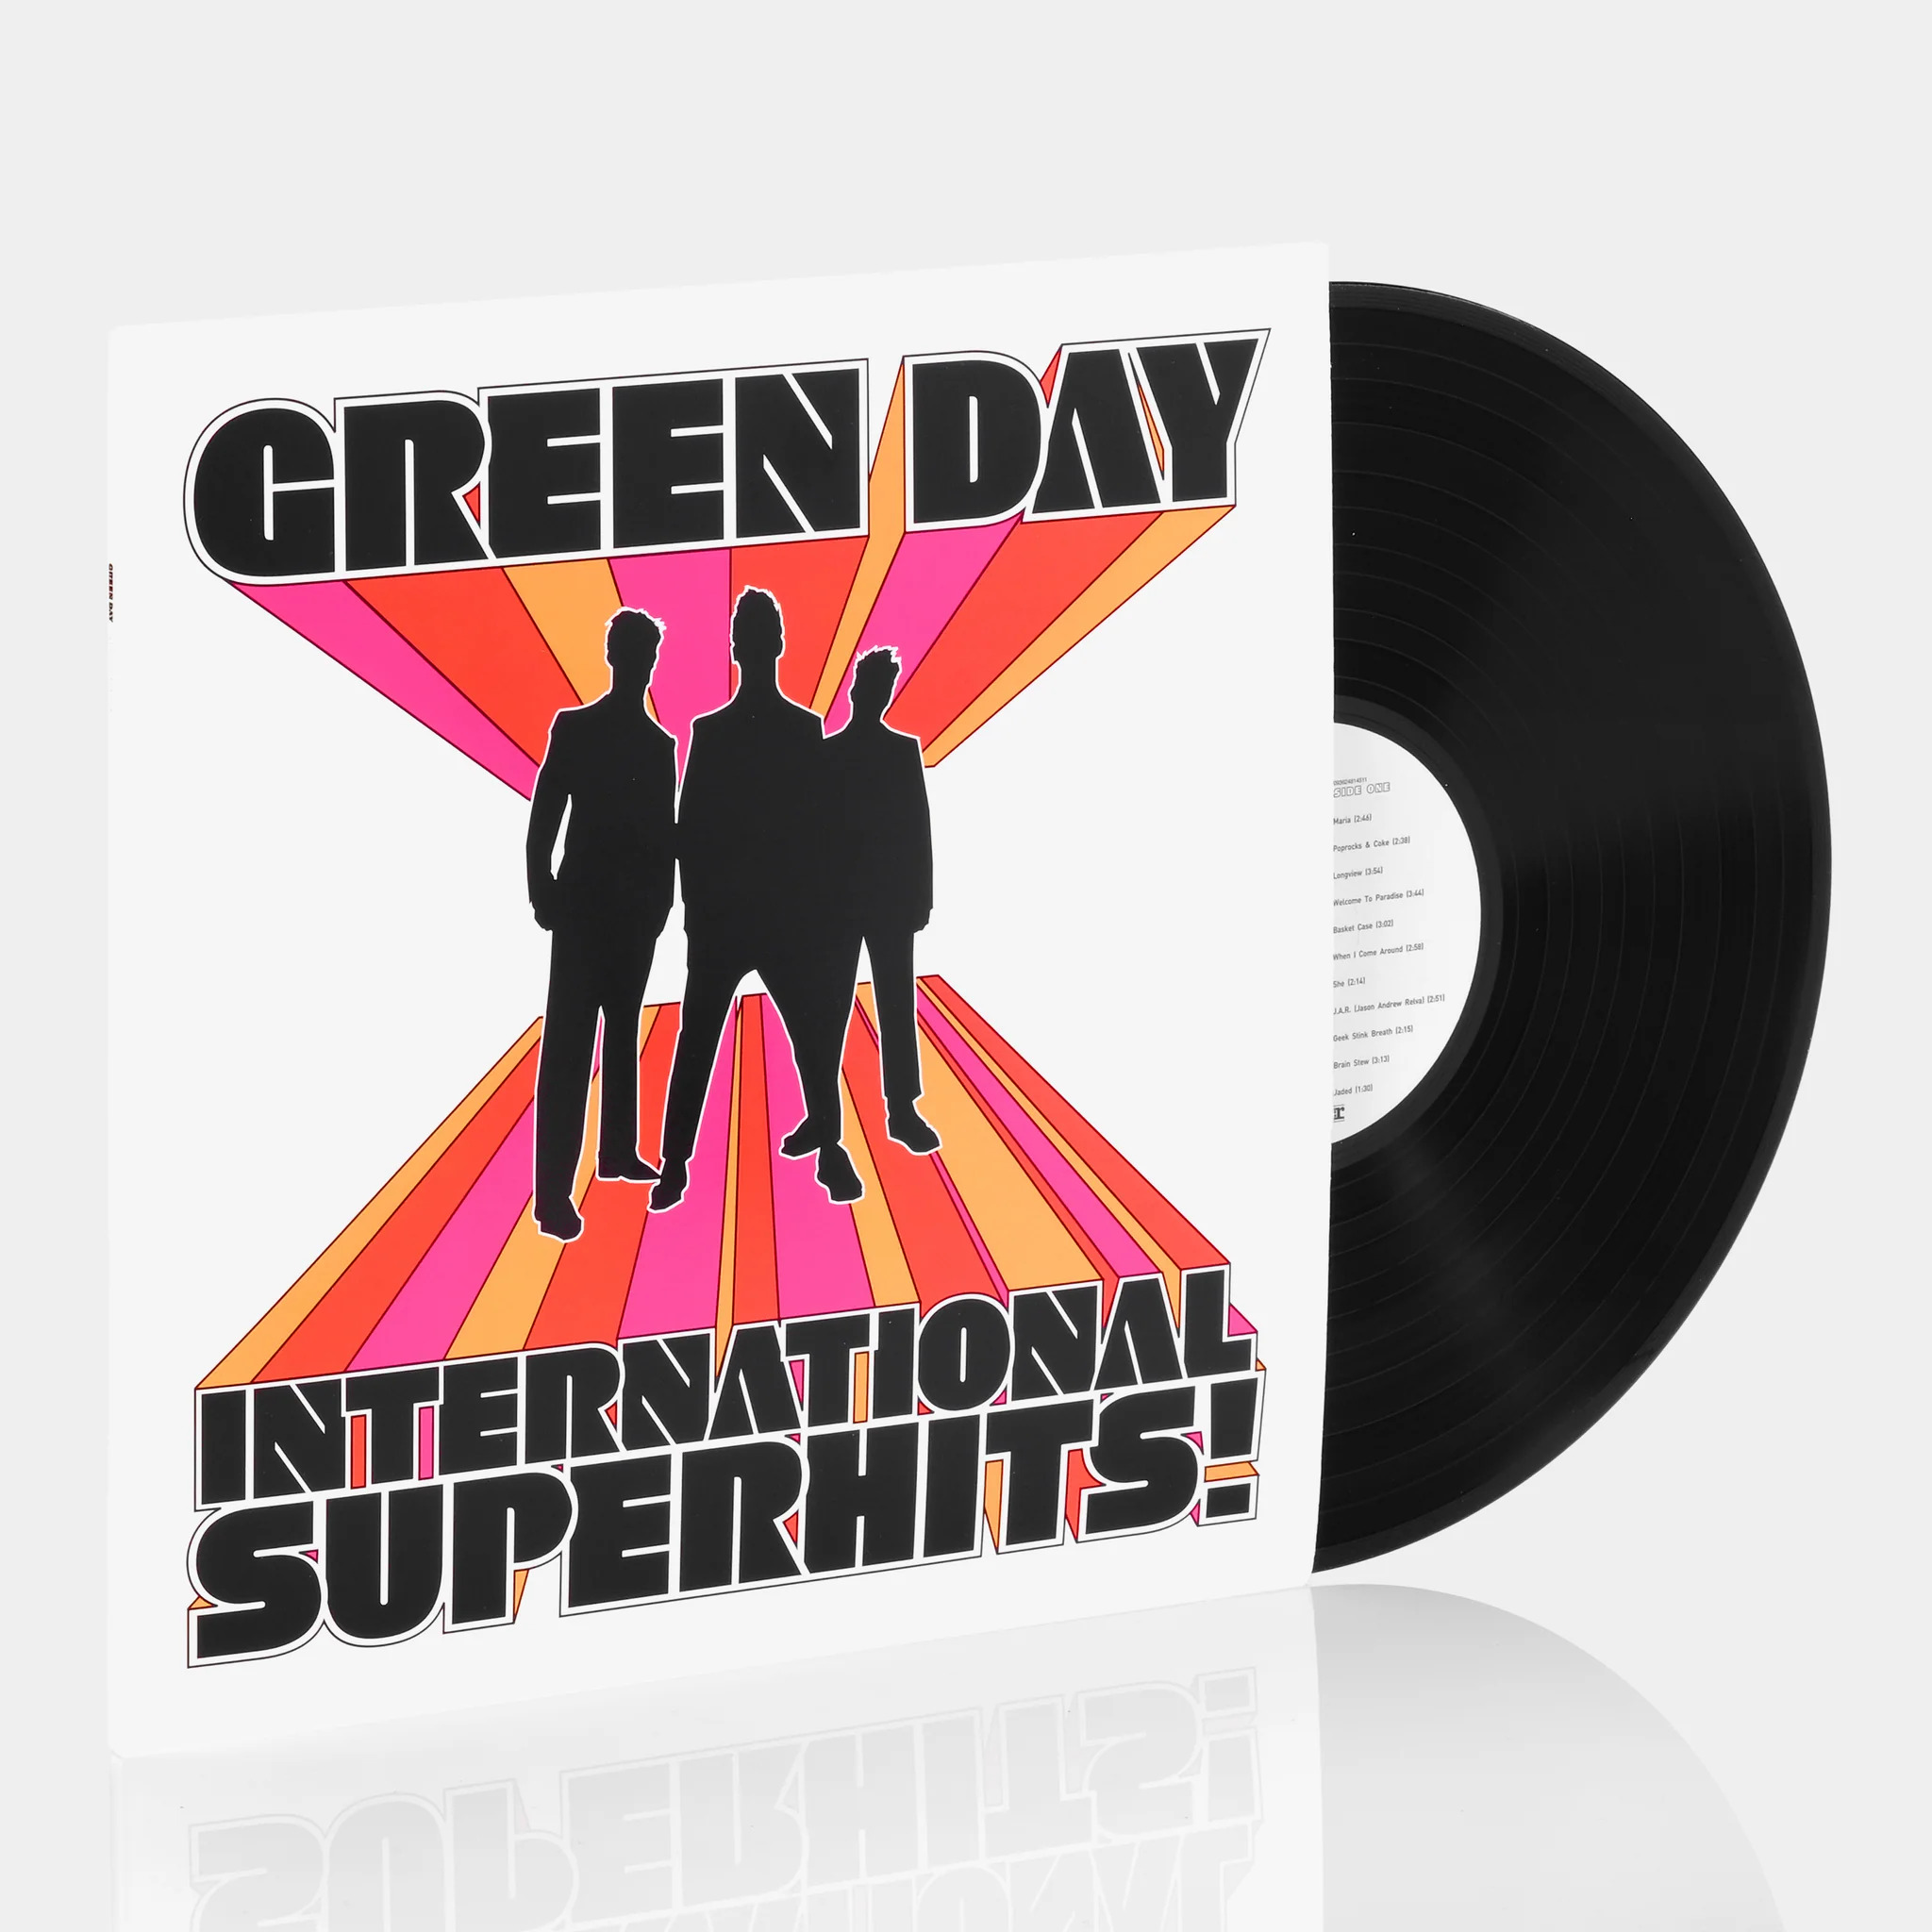 Green Day Minority 7 GREEN VINYL Record! non warning lp live b-sides! punk  NEW!